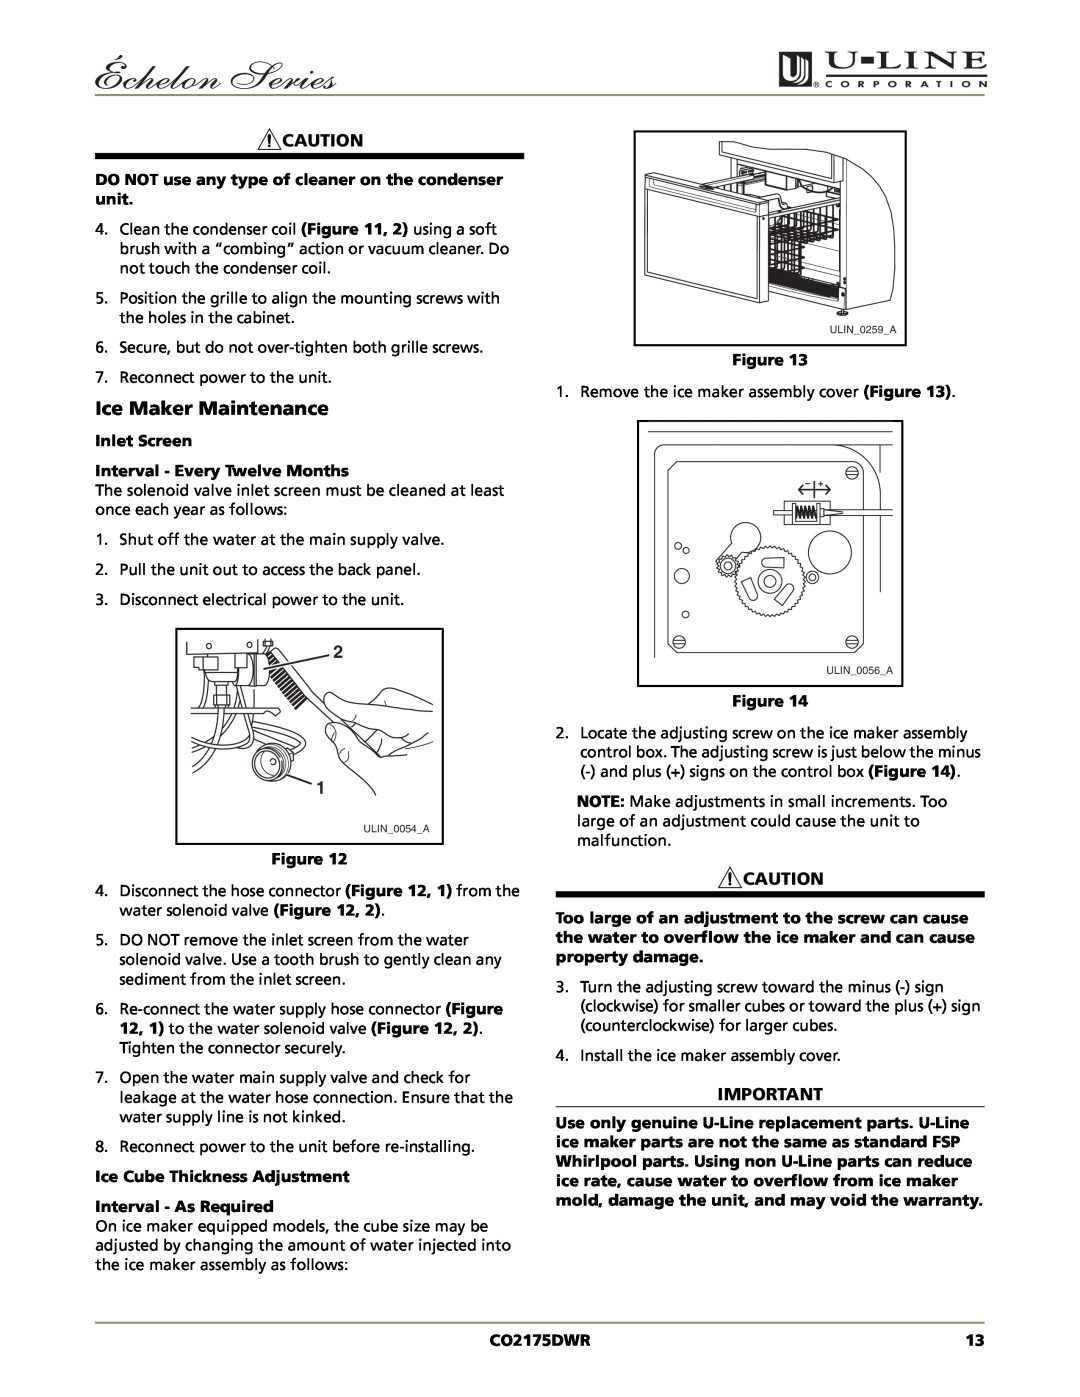 U-Line CO2175DWR manual Ice Maker Maintenance 